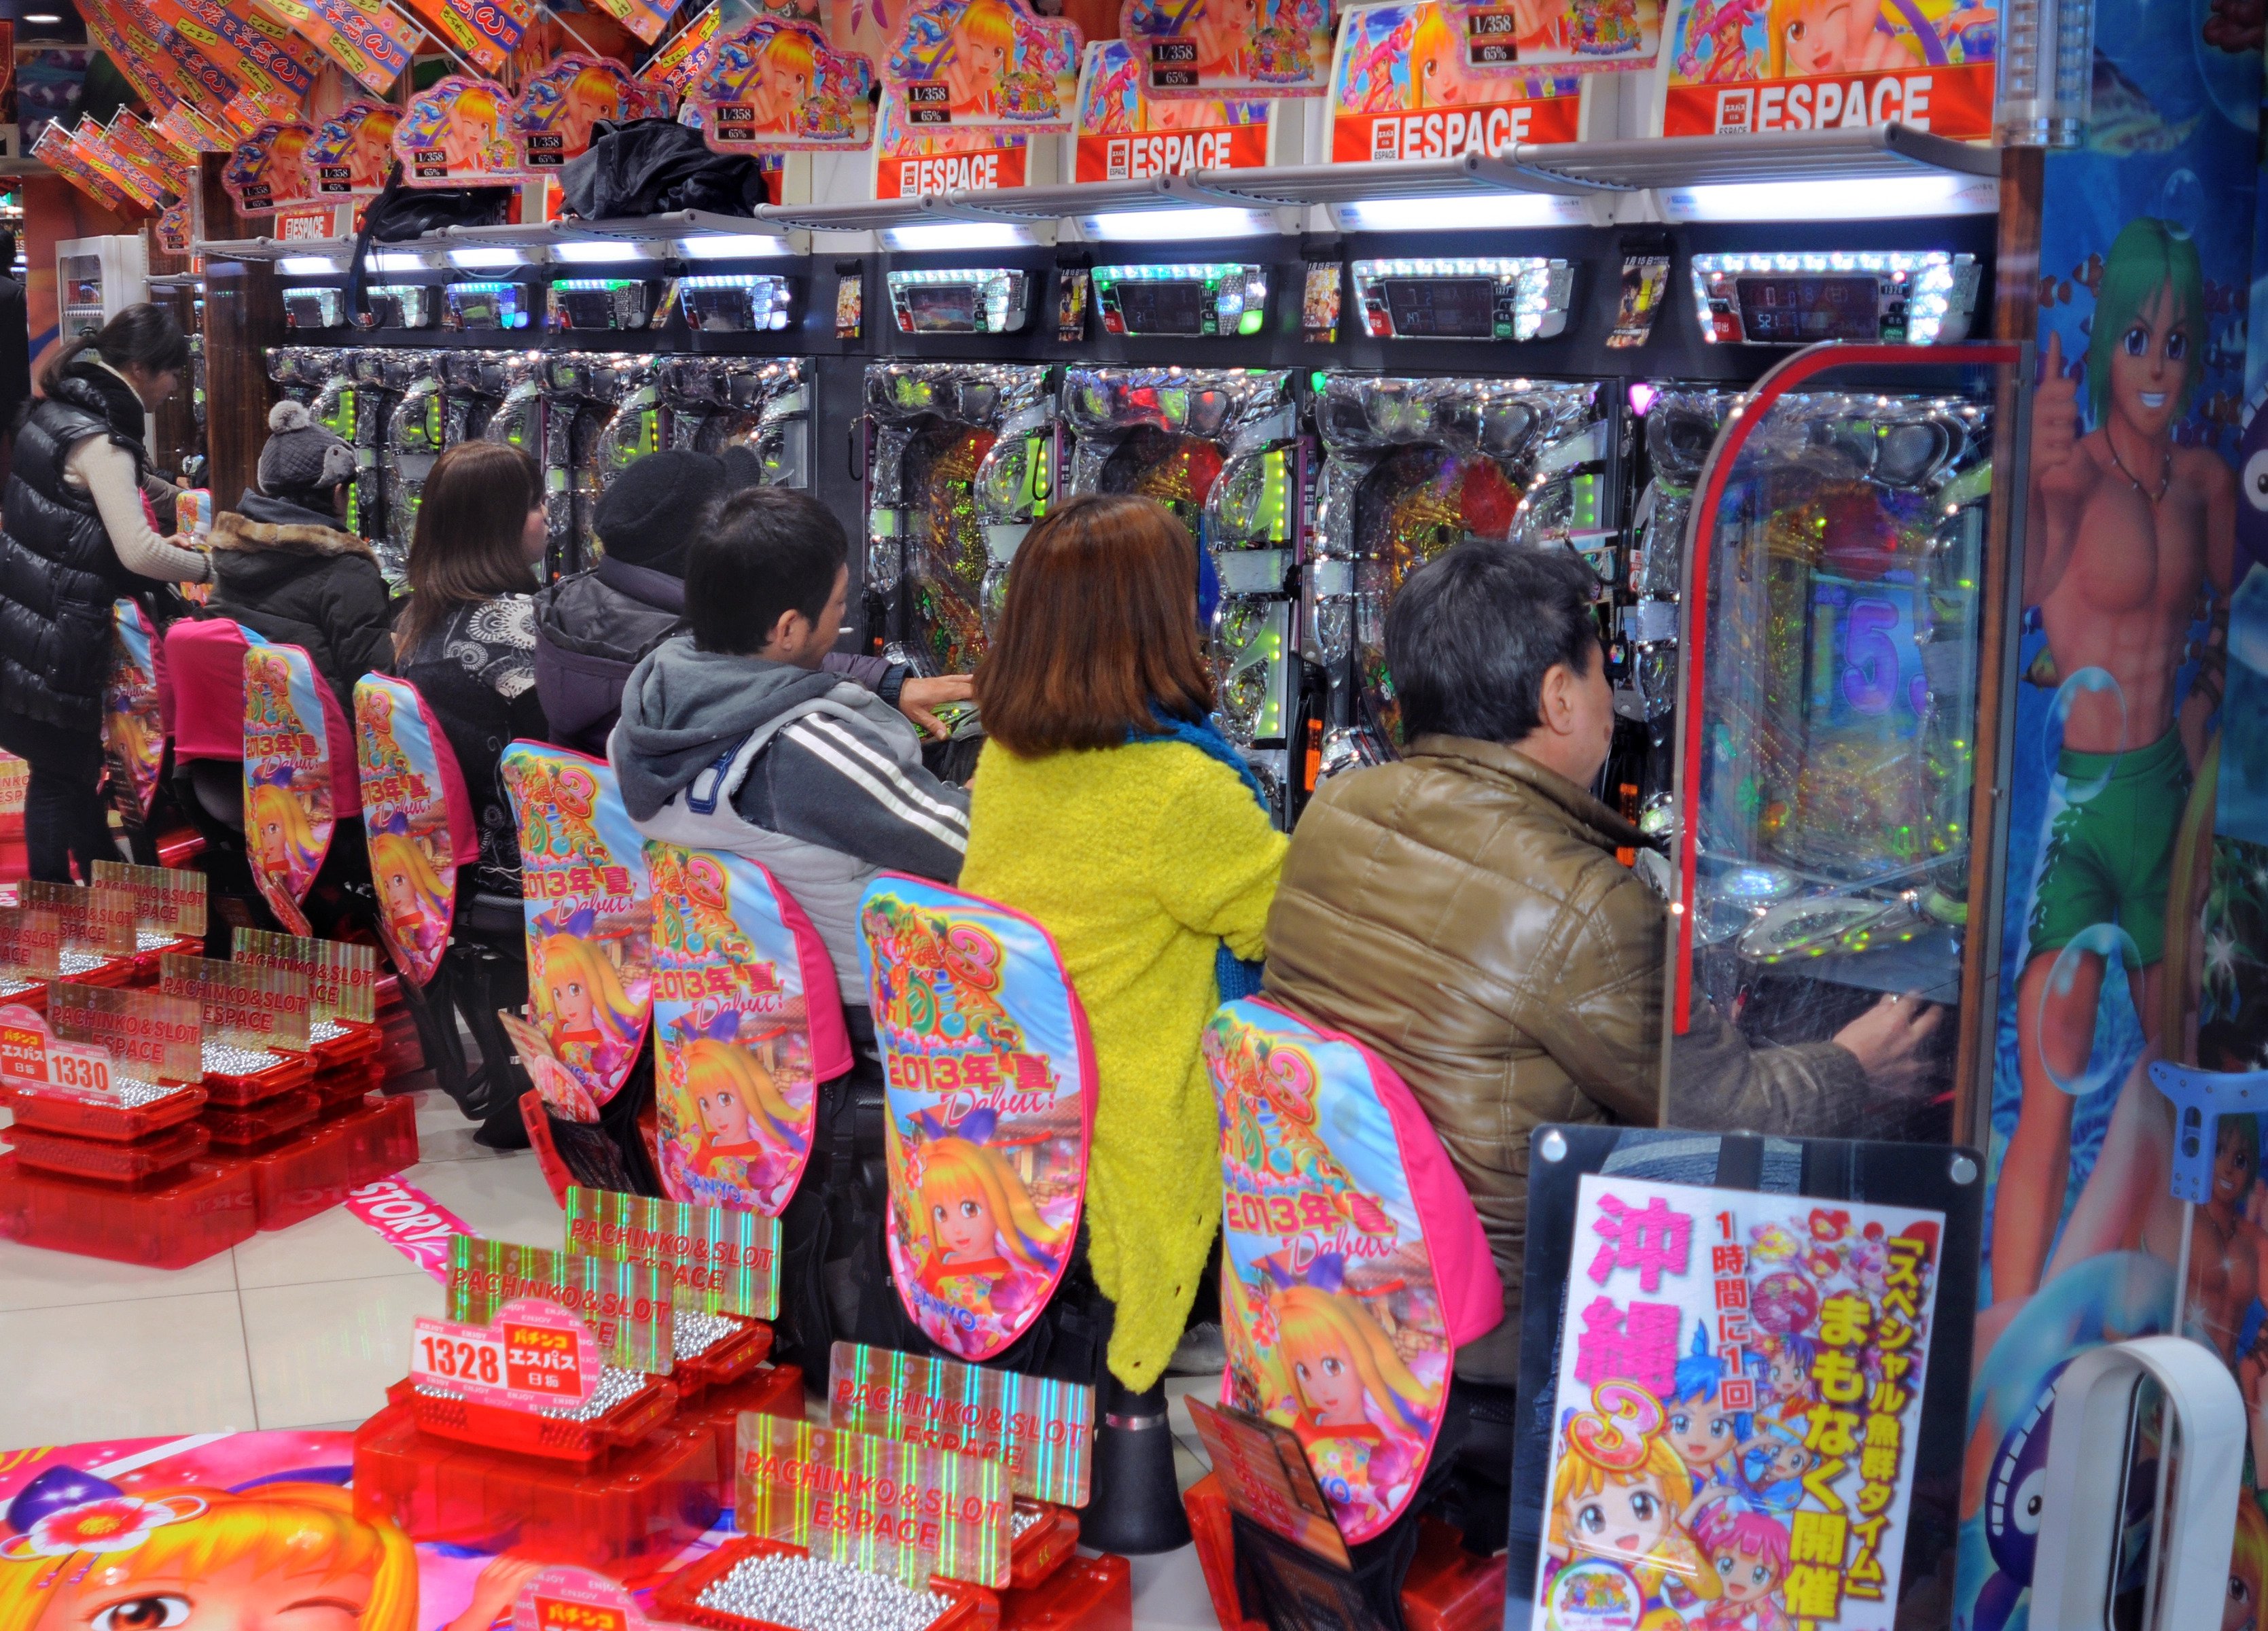 People playing pachinko on the Pachinko machines